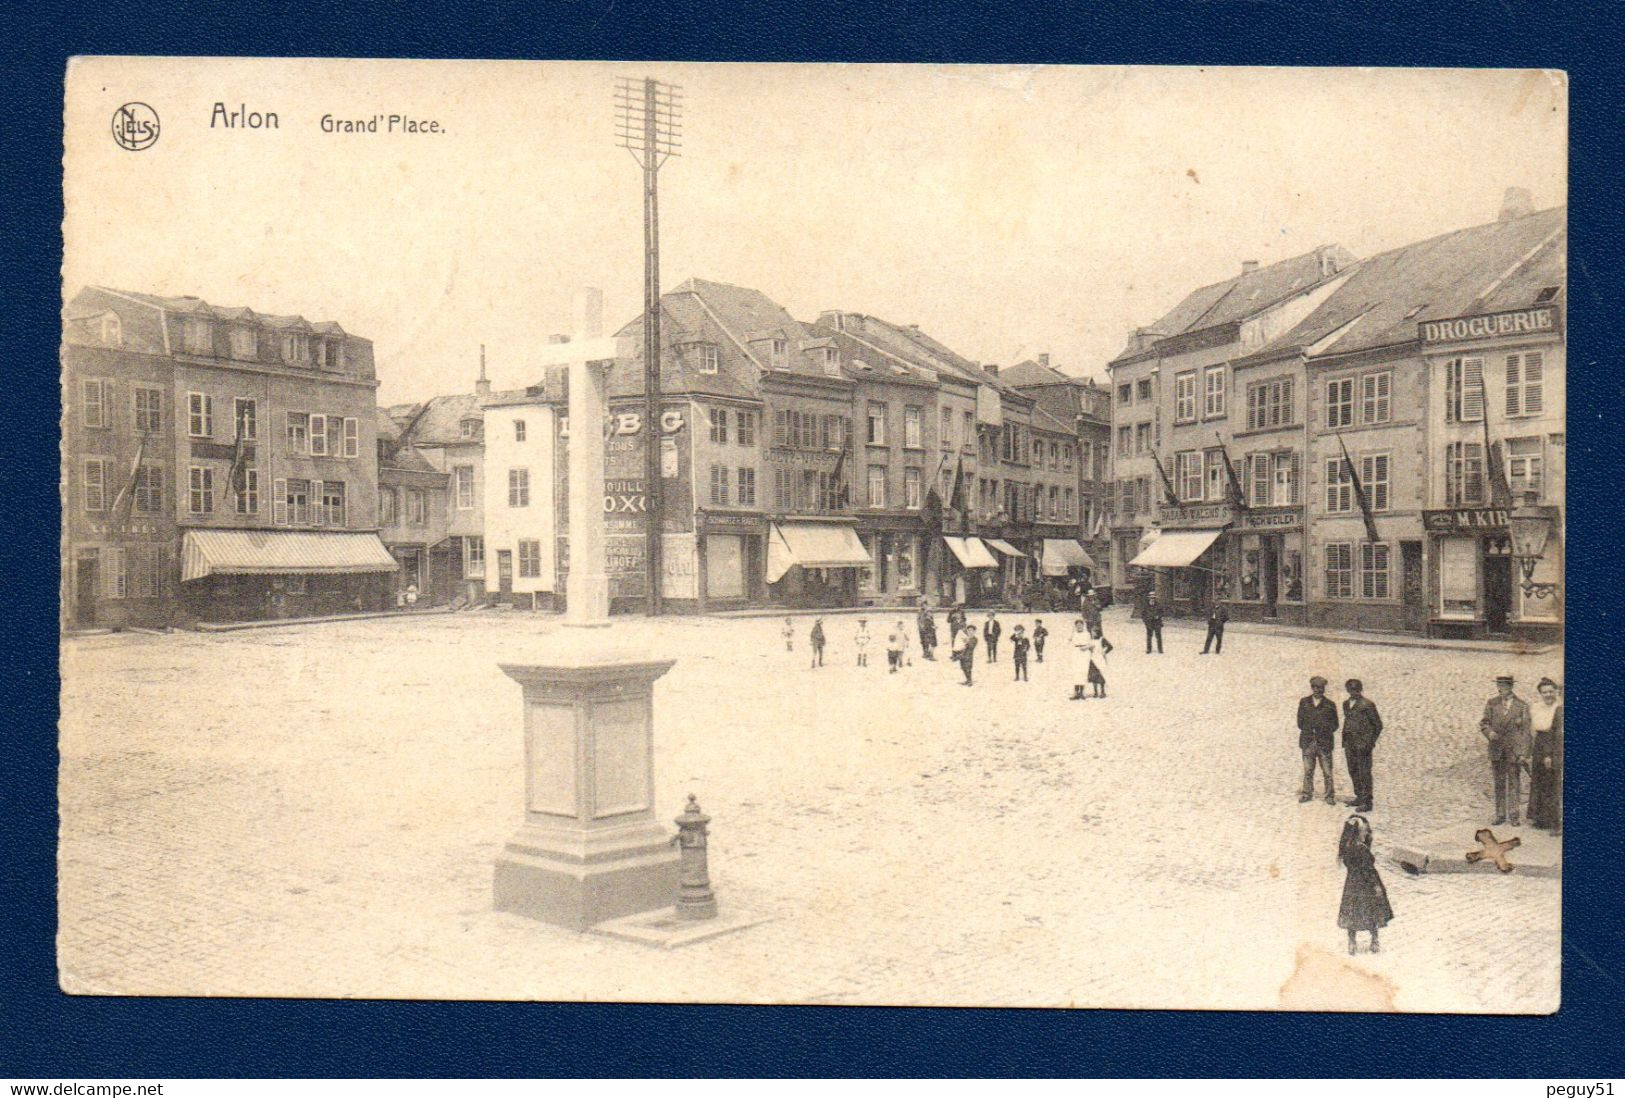 Arlon.  Grand' Place. Schwartz-Ravet. Goetz-Nassogne. Bazar Walens S. Fischweiler. Droguerie. 1930 - Arlon